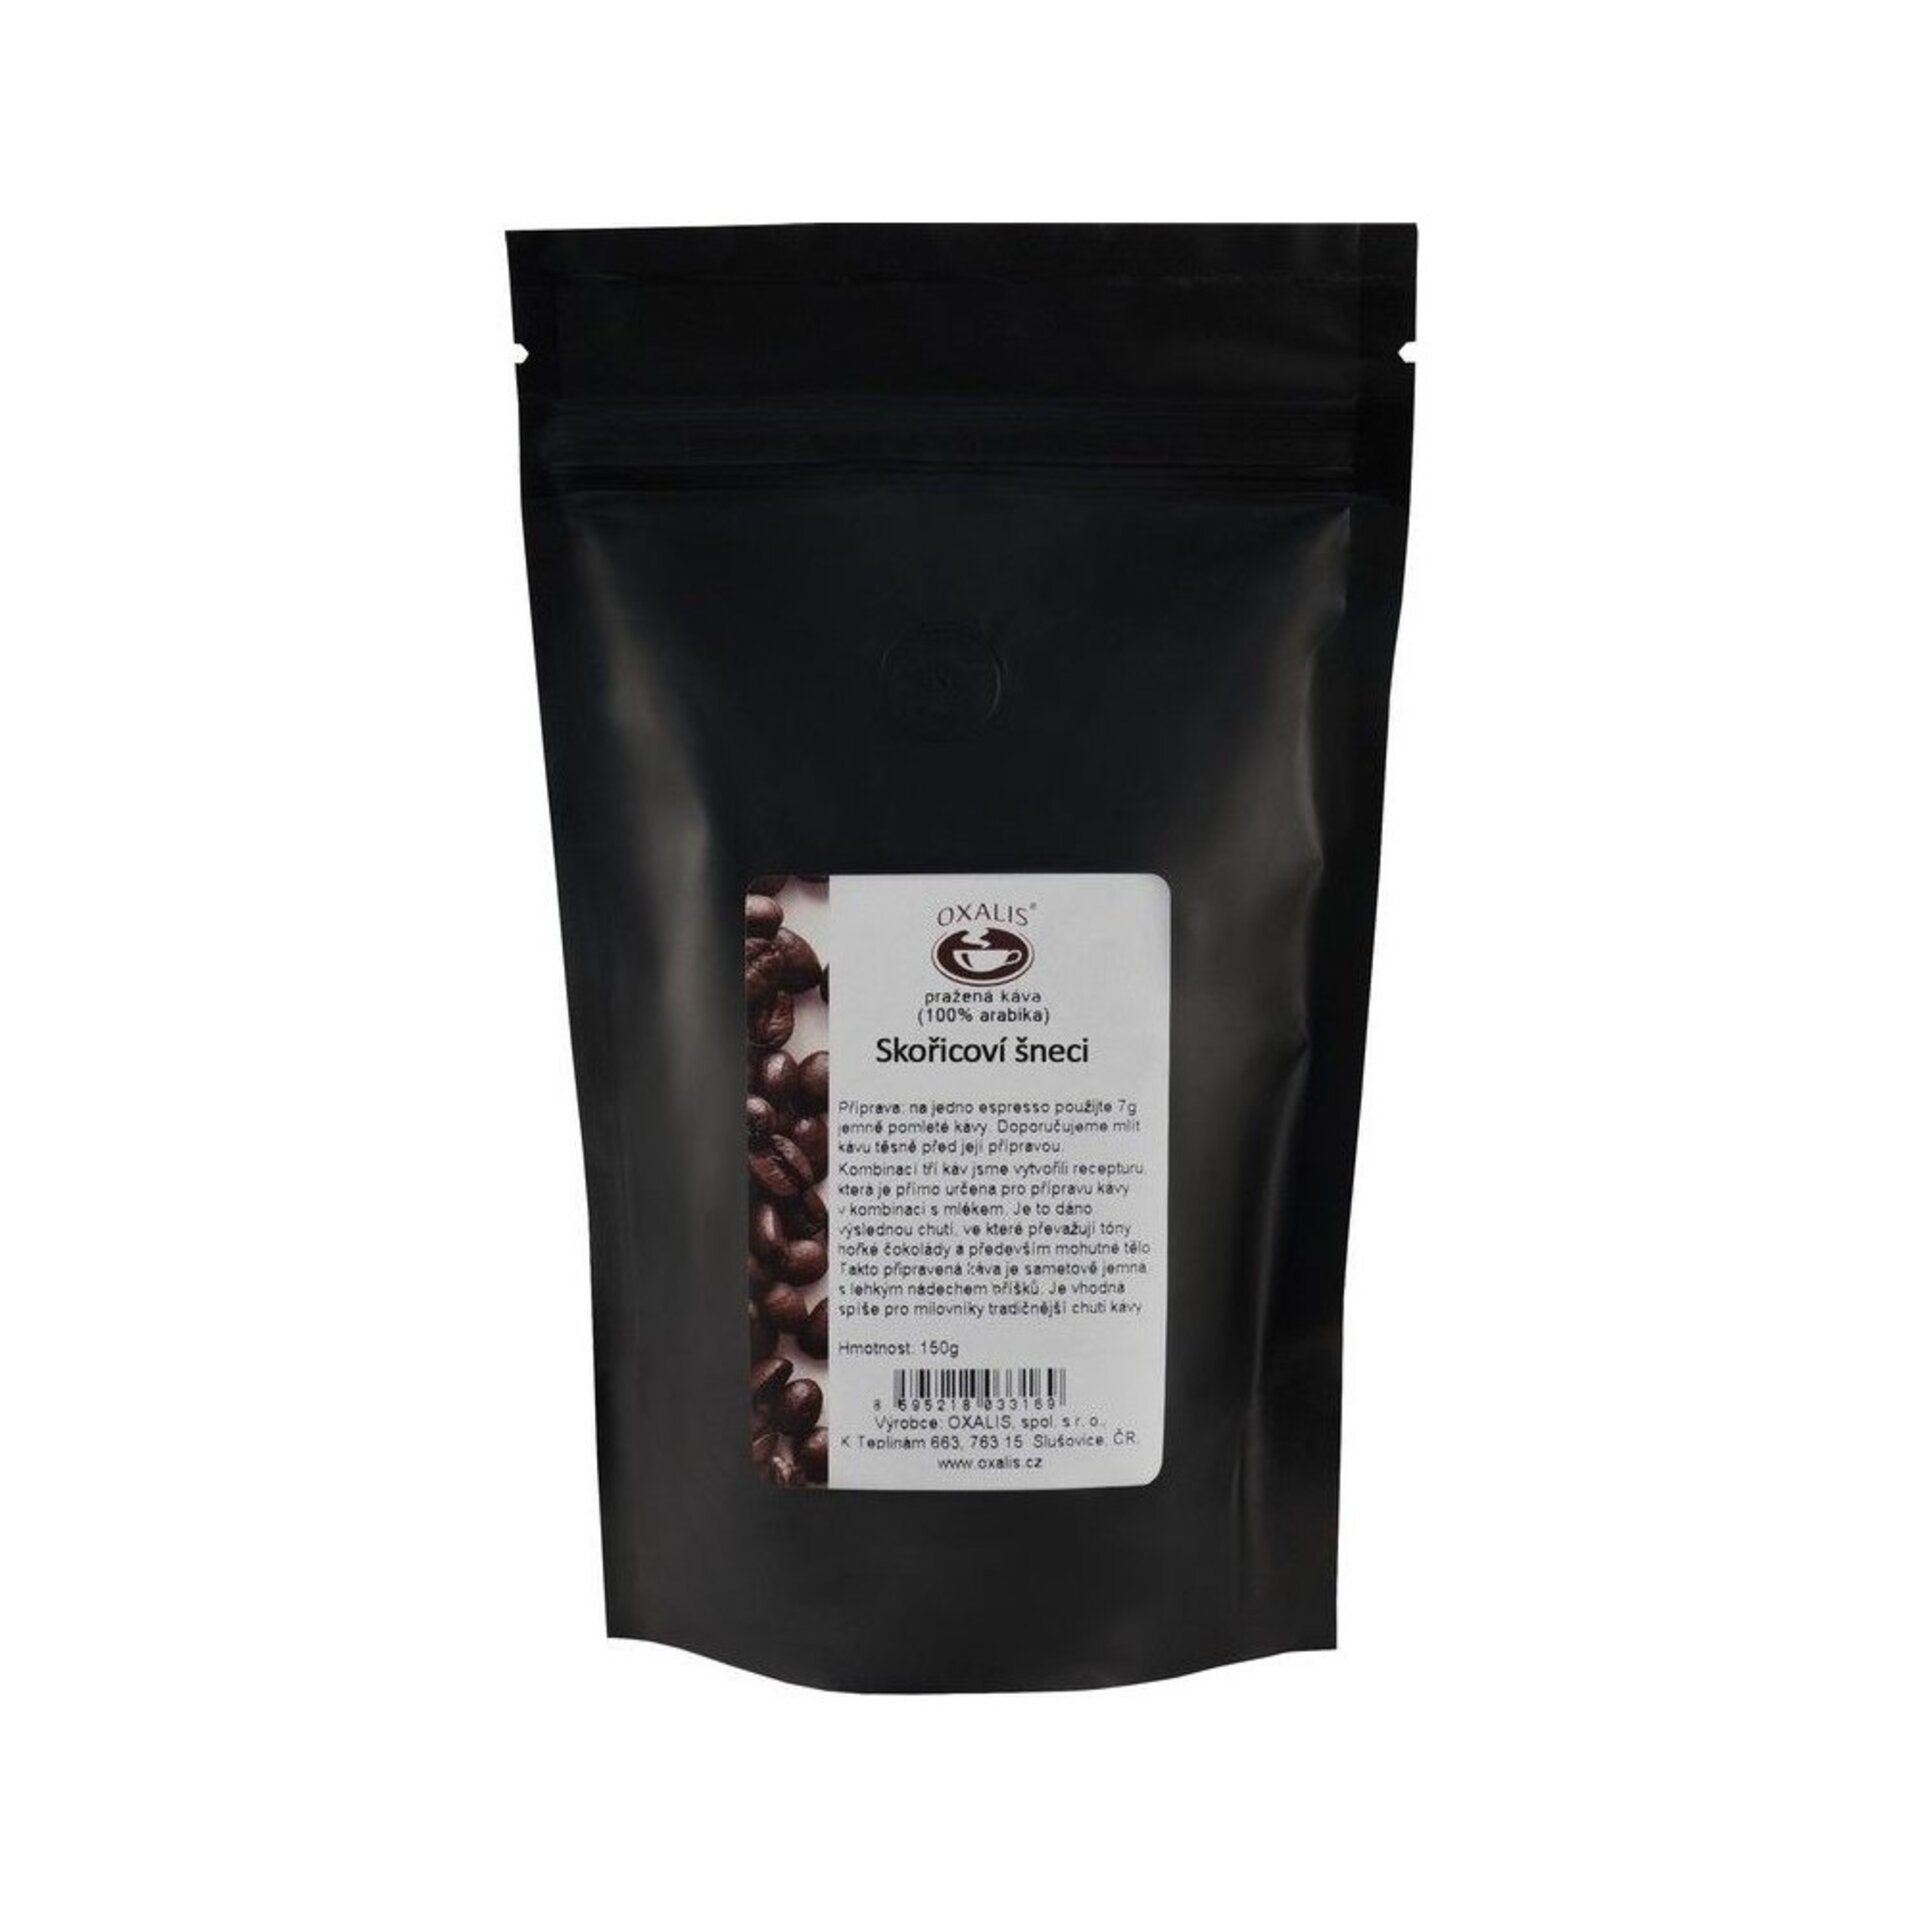 Oxalis Káva aromatizovaná mletá Skořicoví šneci 150 g